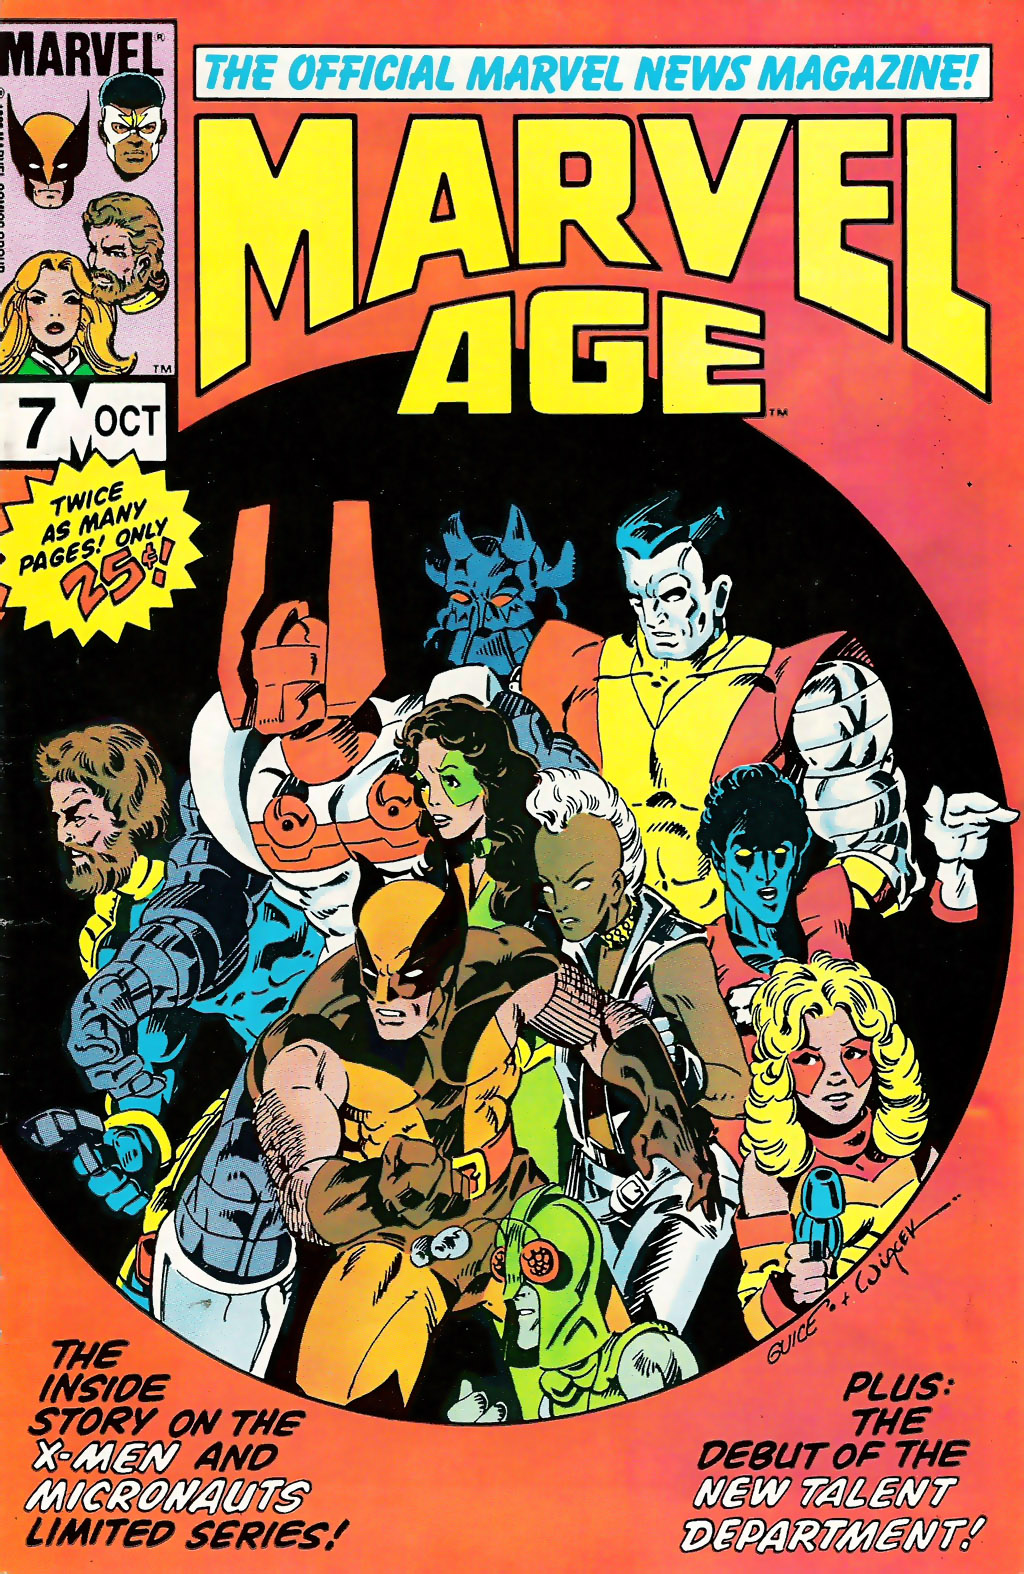 Marvel Age Vol. 1 #7